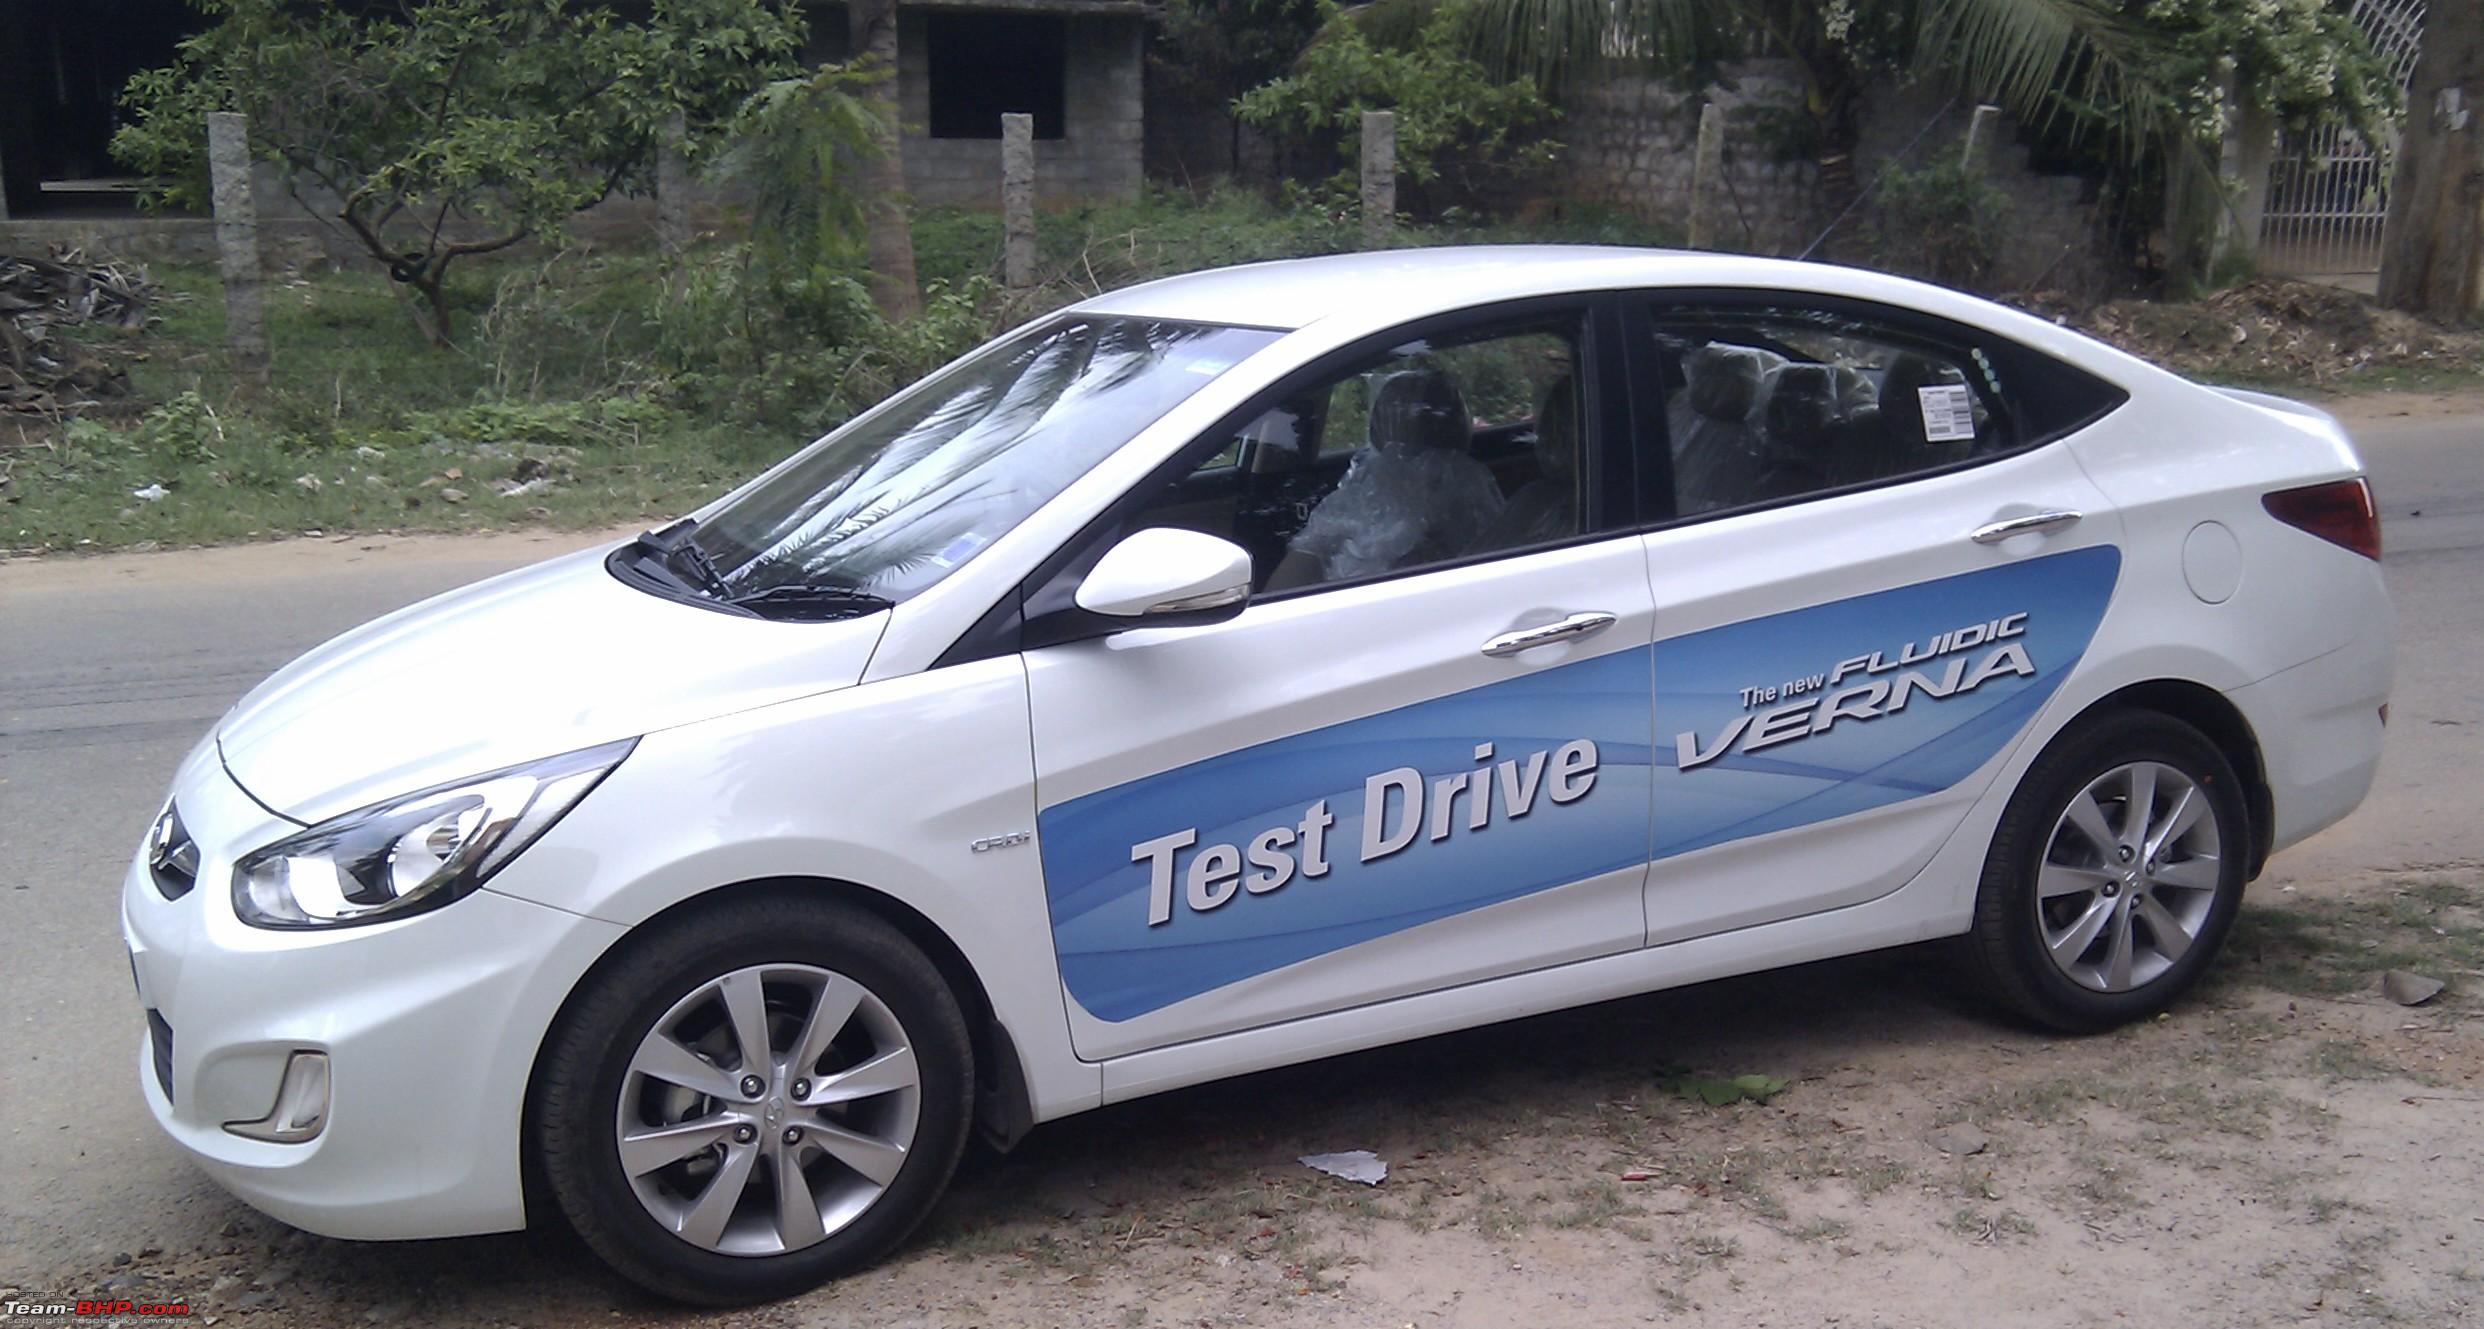 Test Drive Cars